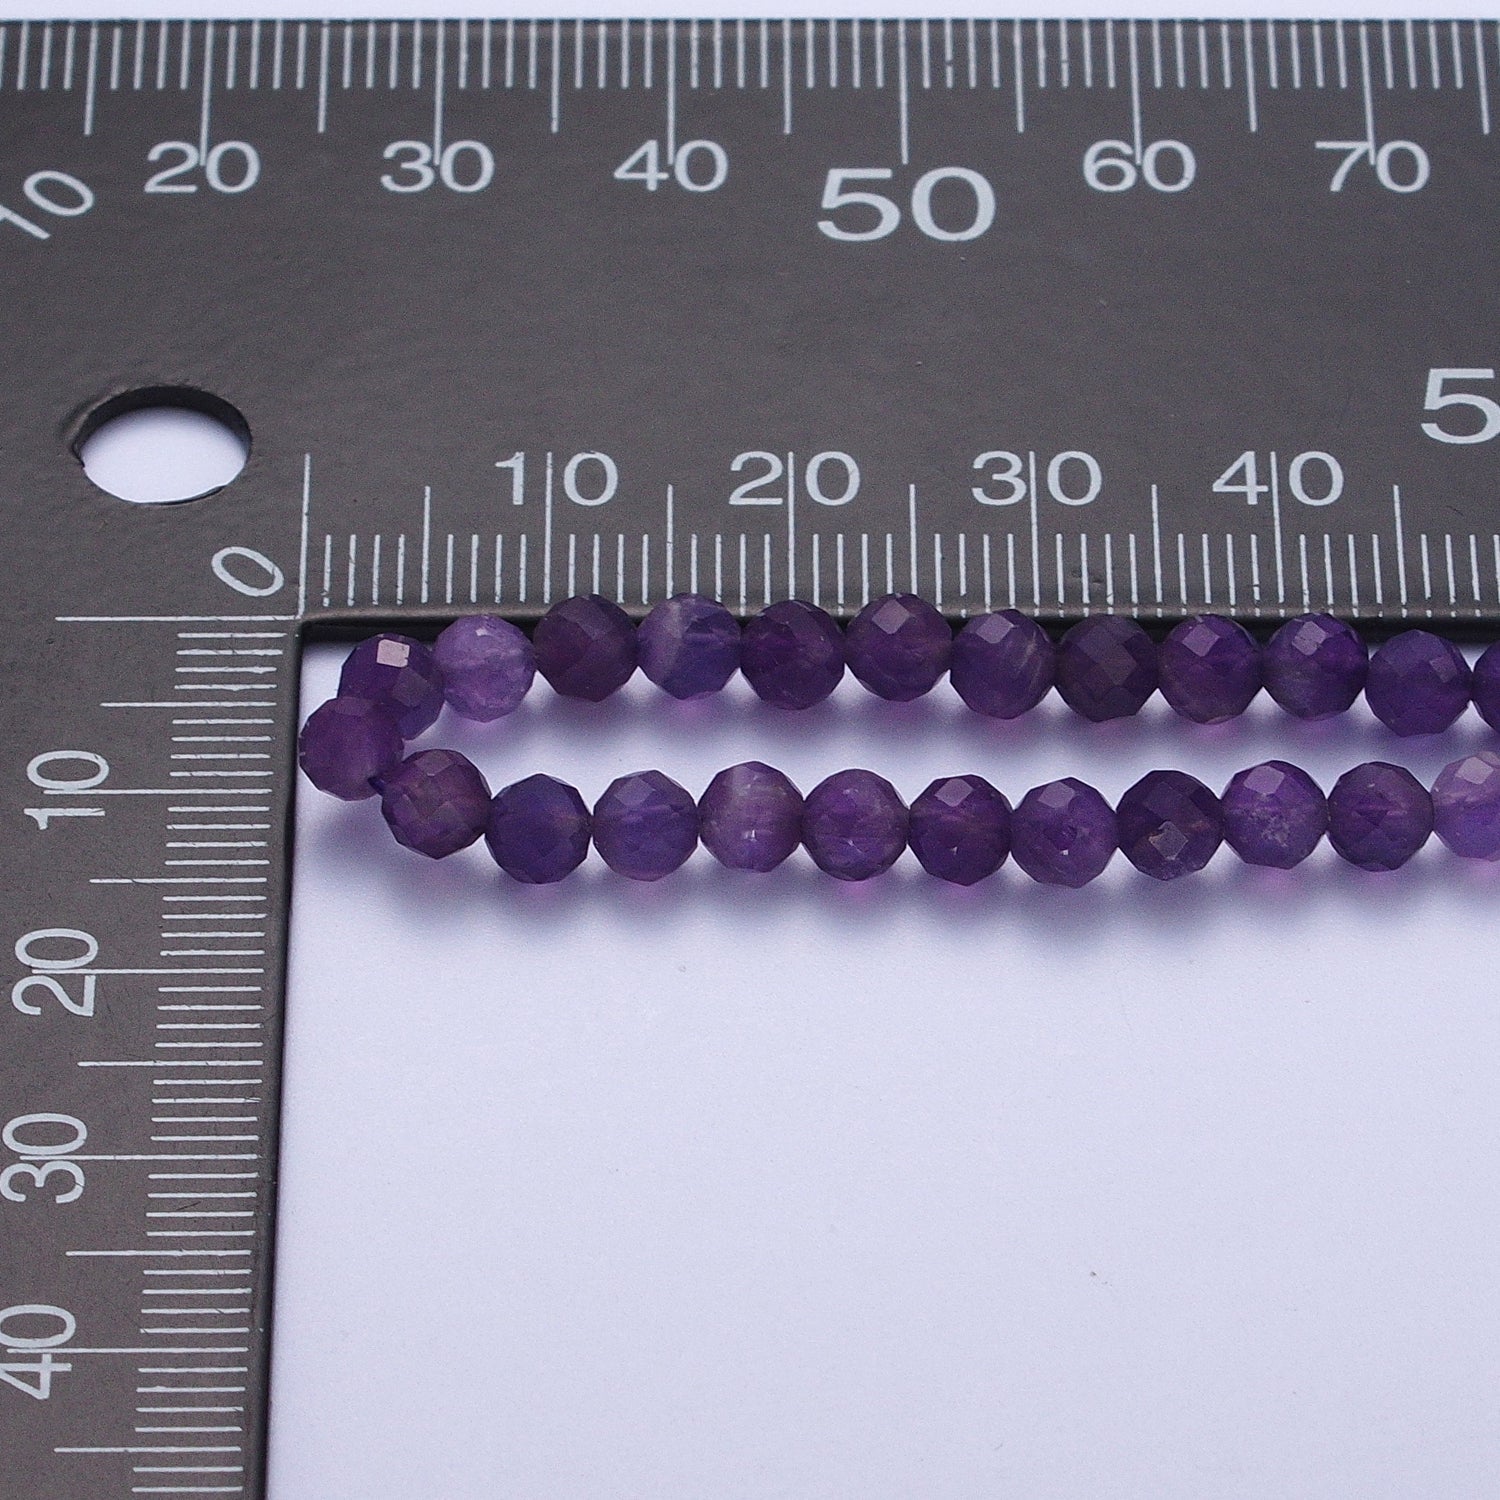 4.3mm Multifaceted Dark Purple Amethyst Gemstone 16.5 Inch Choker Necklace | WA-1185 - DLUXCA